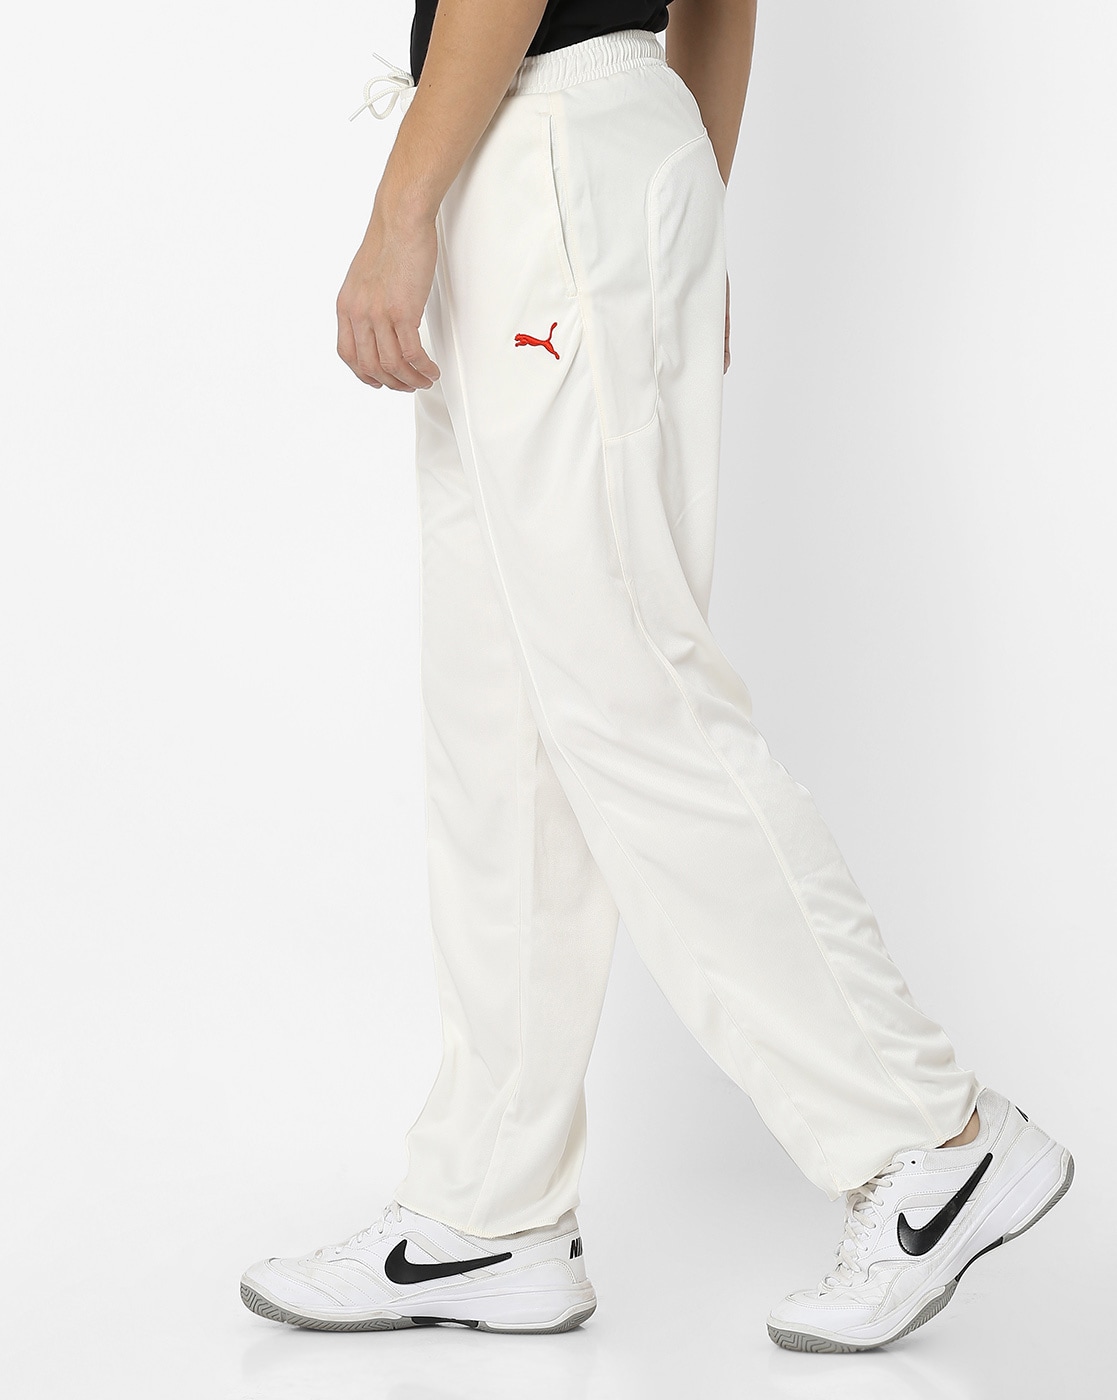 Bratla Club Cricket Trouser Pant Yellow Clearance Final Sale - Cricket Best  Buy